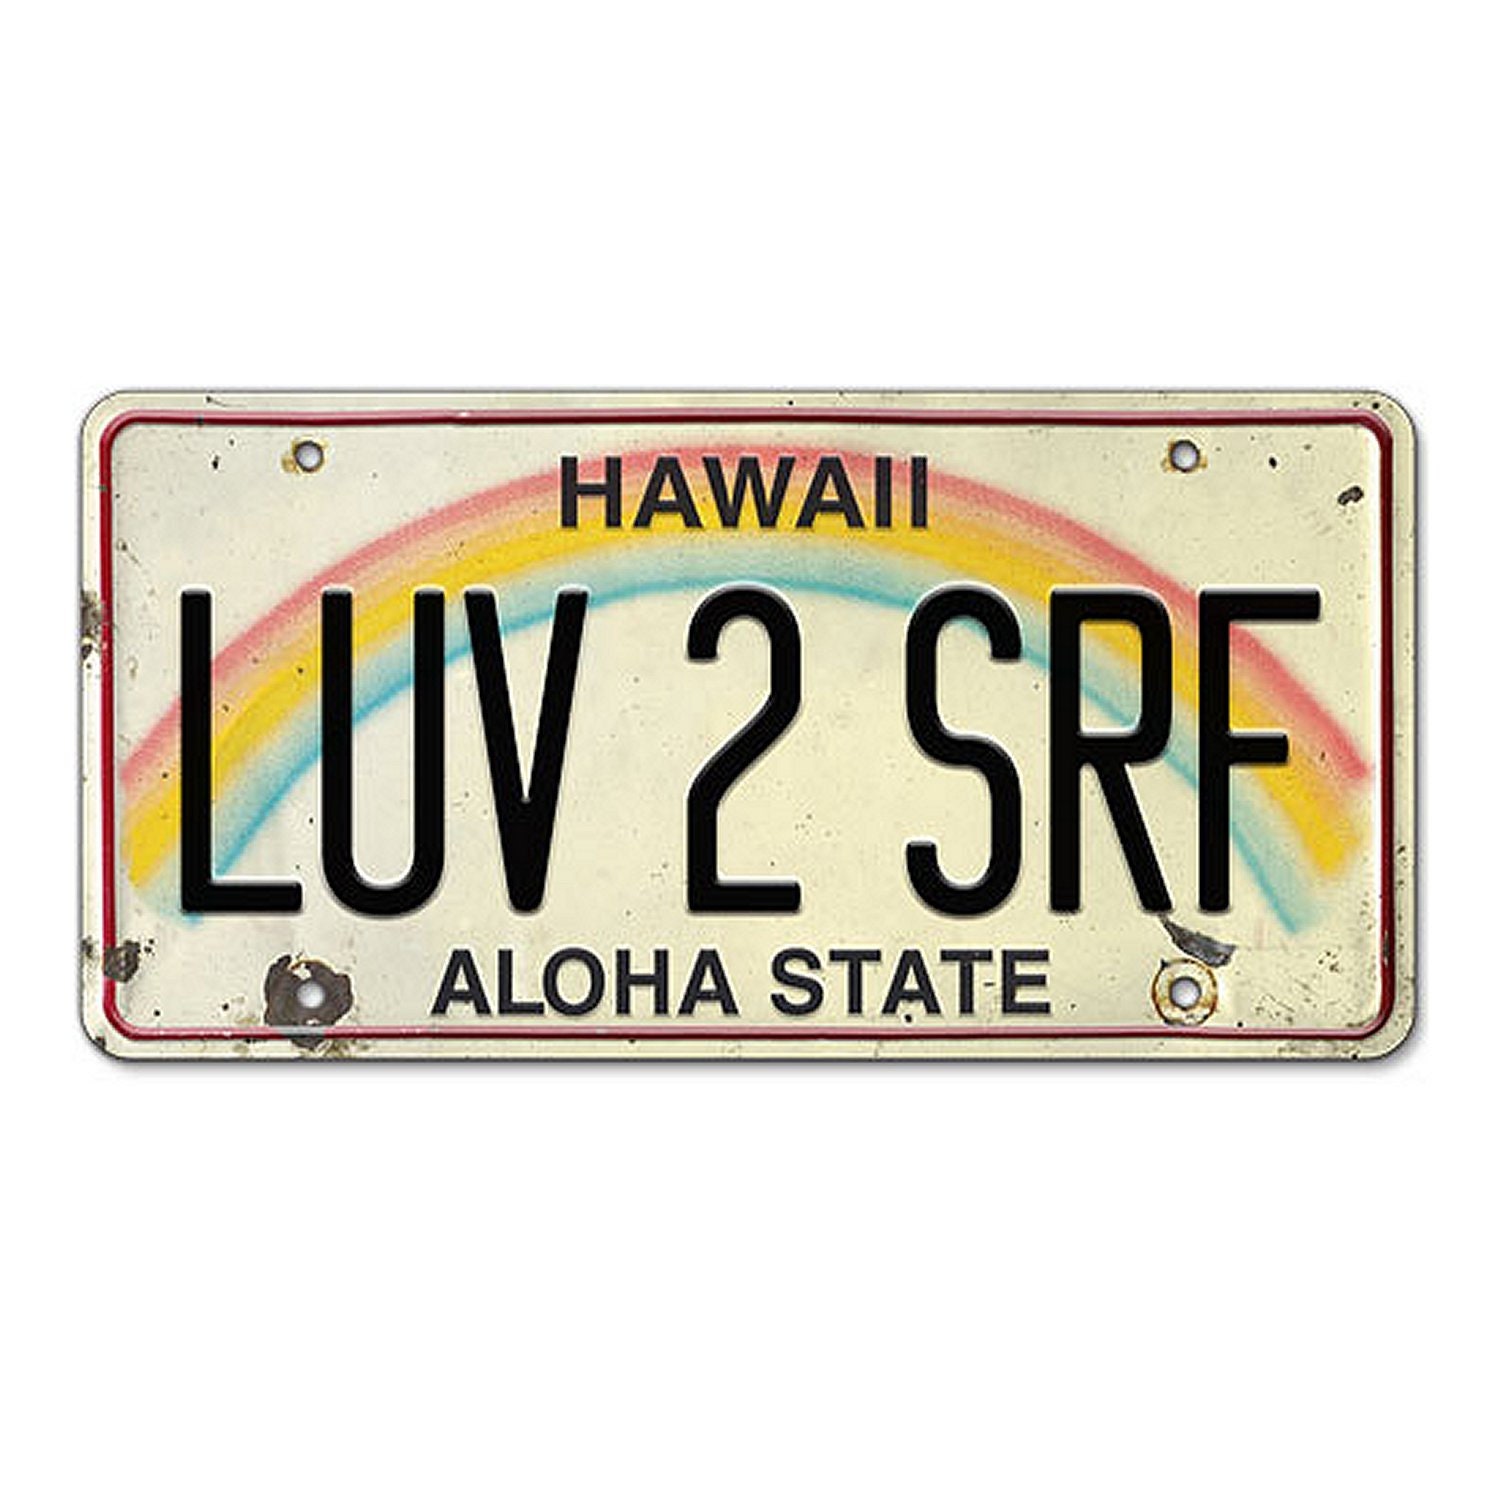 Abstract Plumeria Aloha Hawaii Hawaiian License Plate Frame Car Licence Plate Covers Auto Tag Holder 6 x 12 